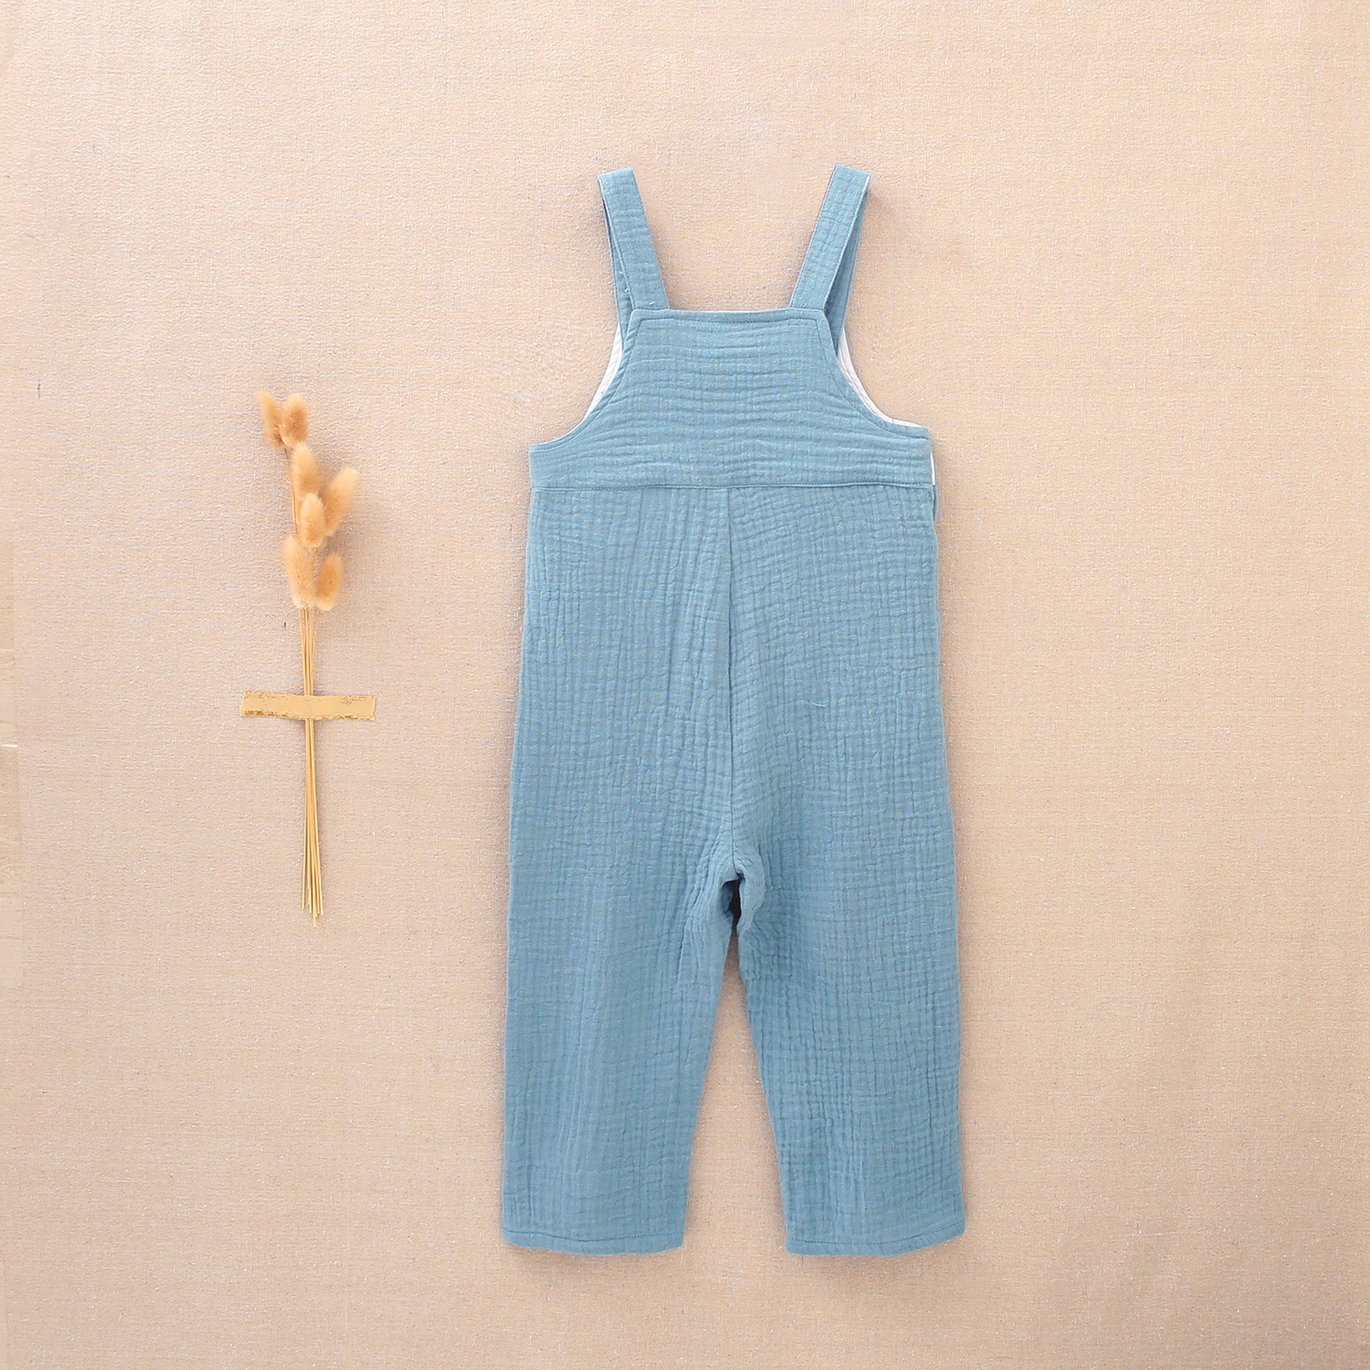 Imagen de Peto de bebé niño de tirantes azul con botones de madera